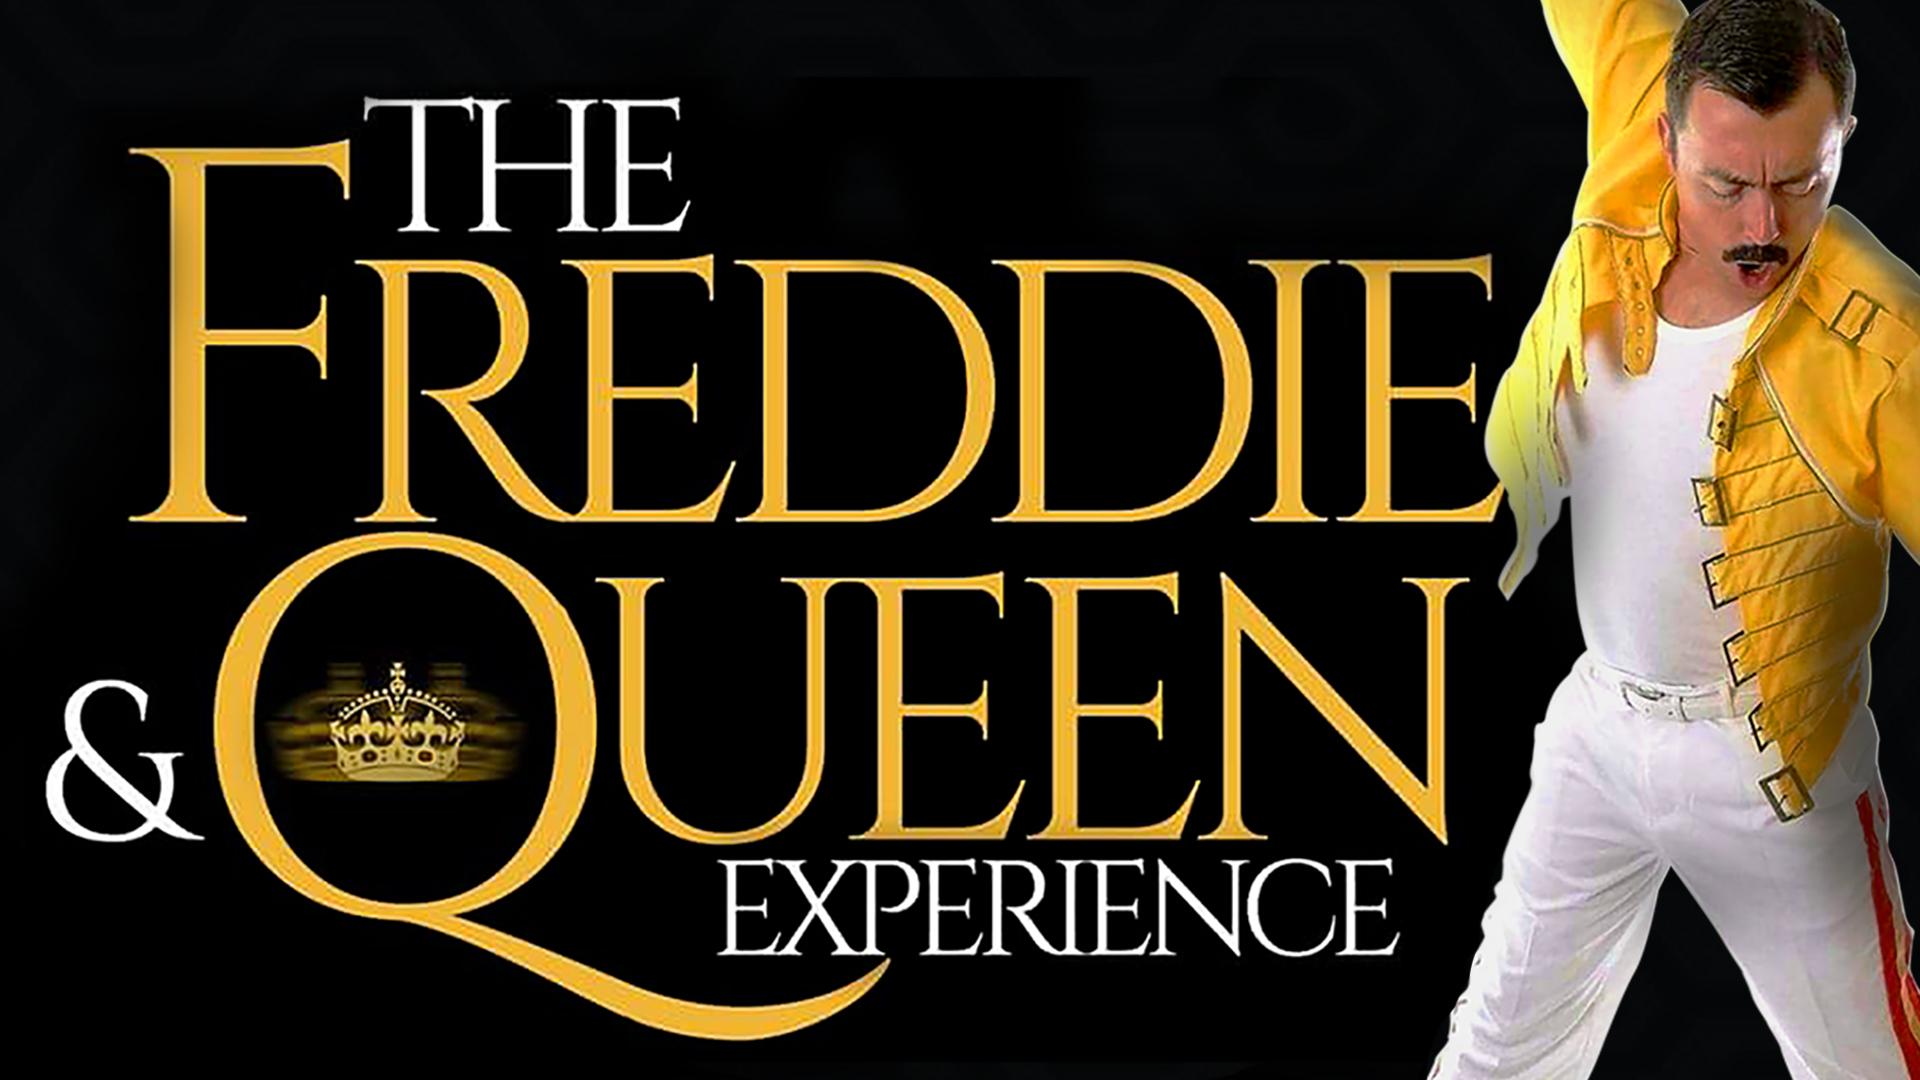 Freddie Queen Experience 1920 X 1080